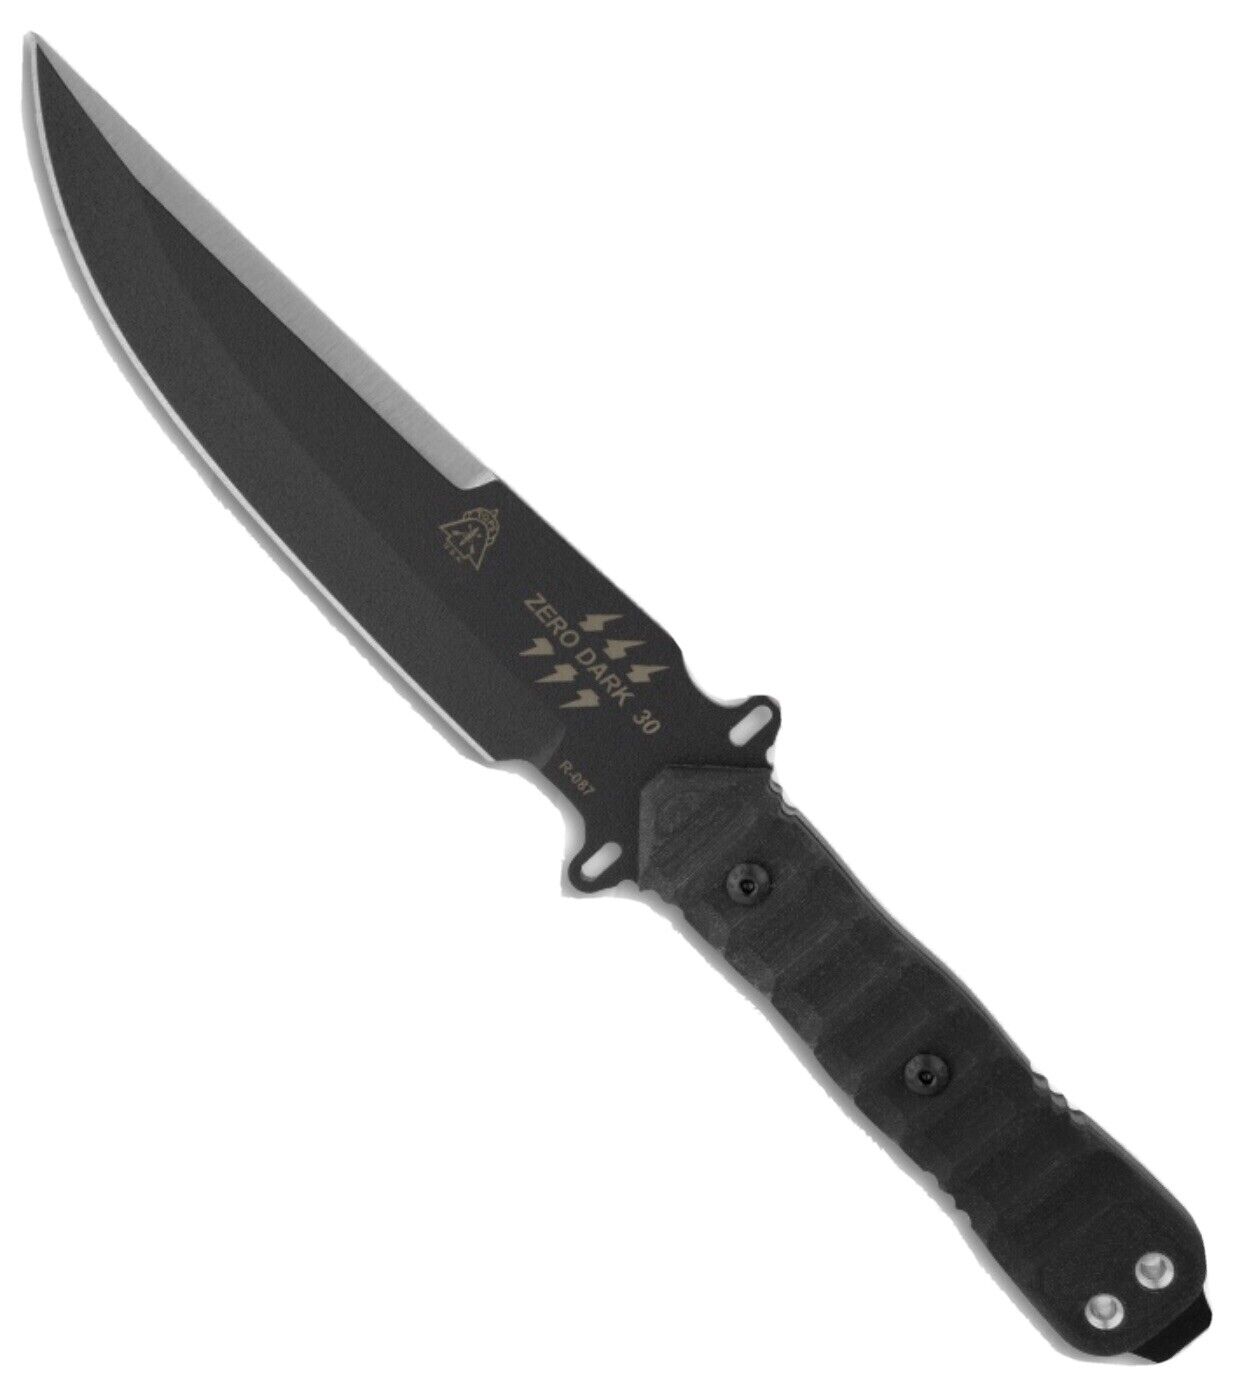 New TOPS Zero Dark 30 Knife